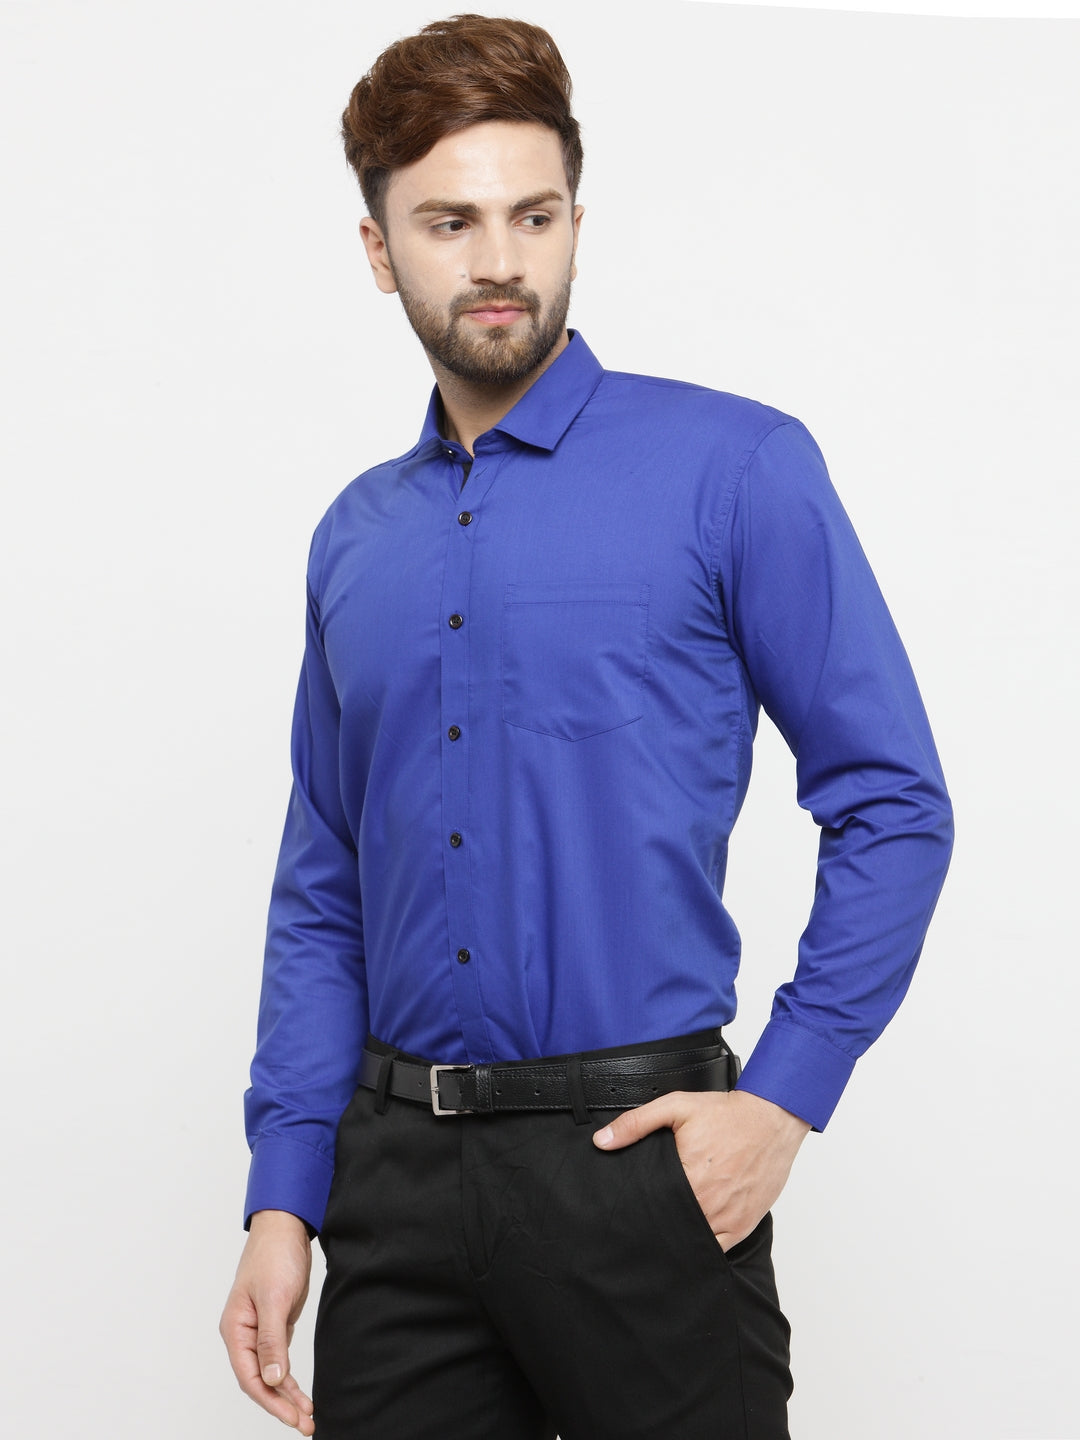 Men's Royal Blue Formal Shirt with black detailing ( SF 411Royal-Blue ) - Jainish